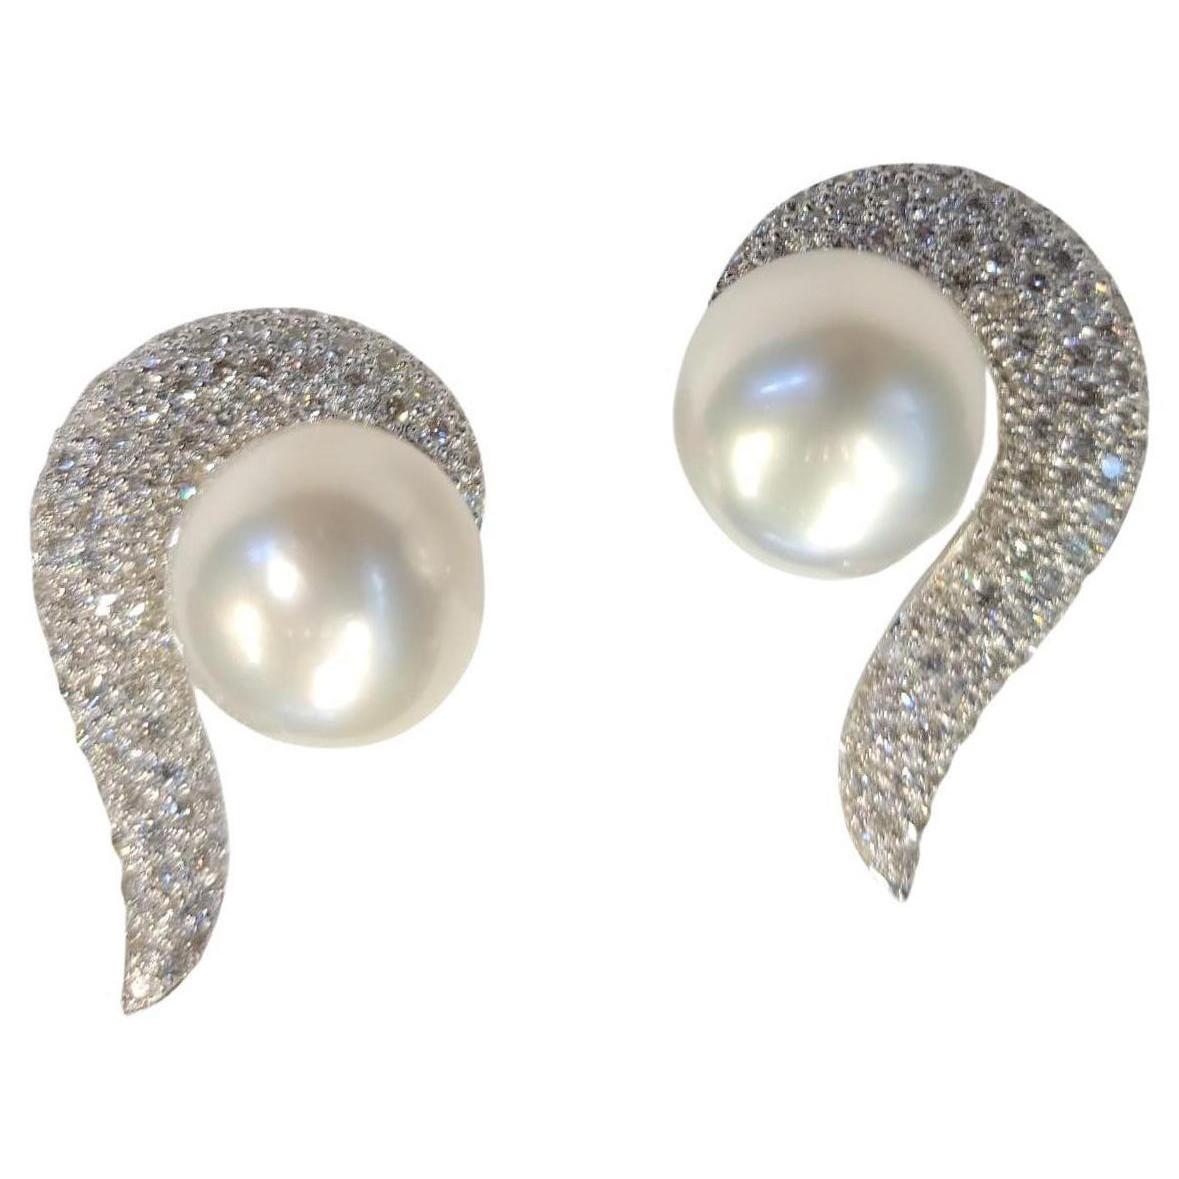 Pearl & Pave Diamond Earring

Measurements: 1.25